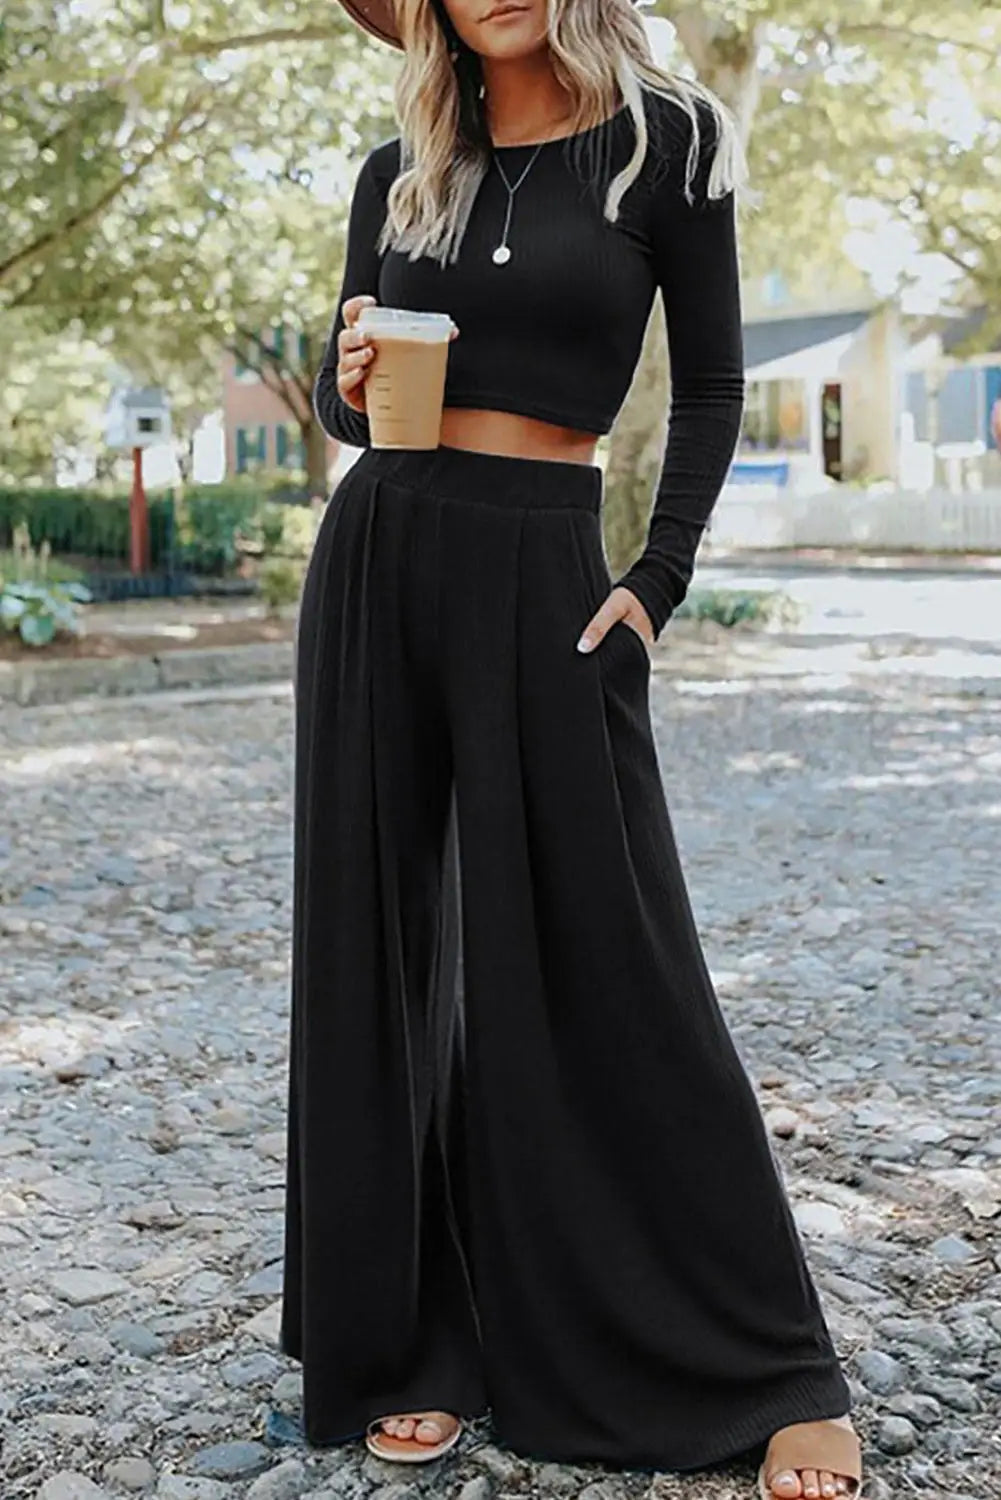 Black solid color ribbed crop top long pants set - s / 65% polyester + 25% viscose + 10% elastane - loungewear